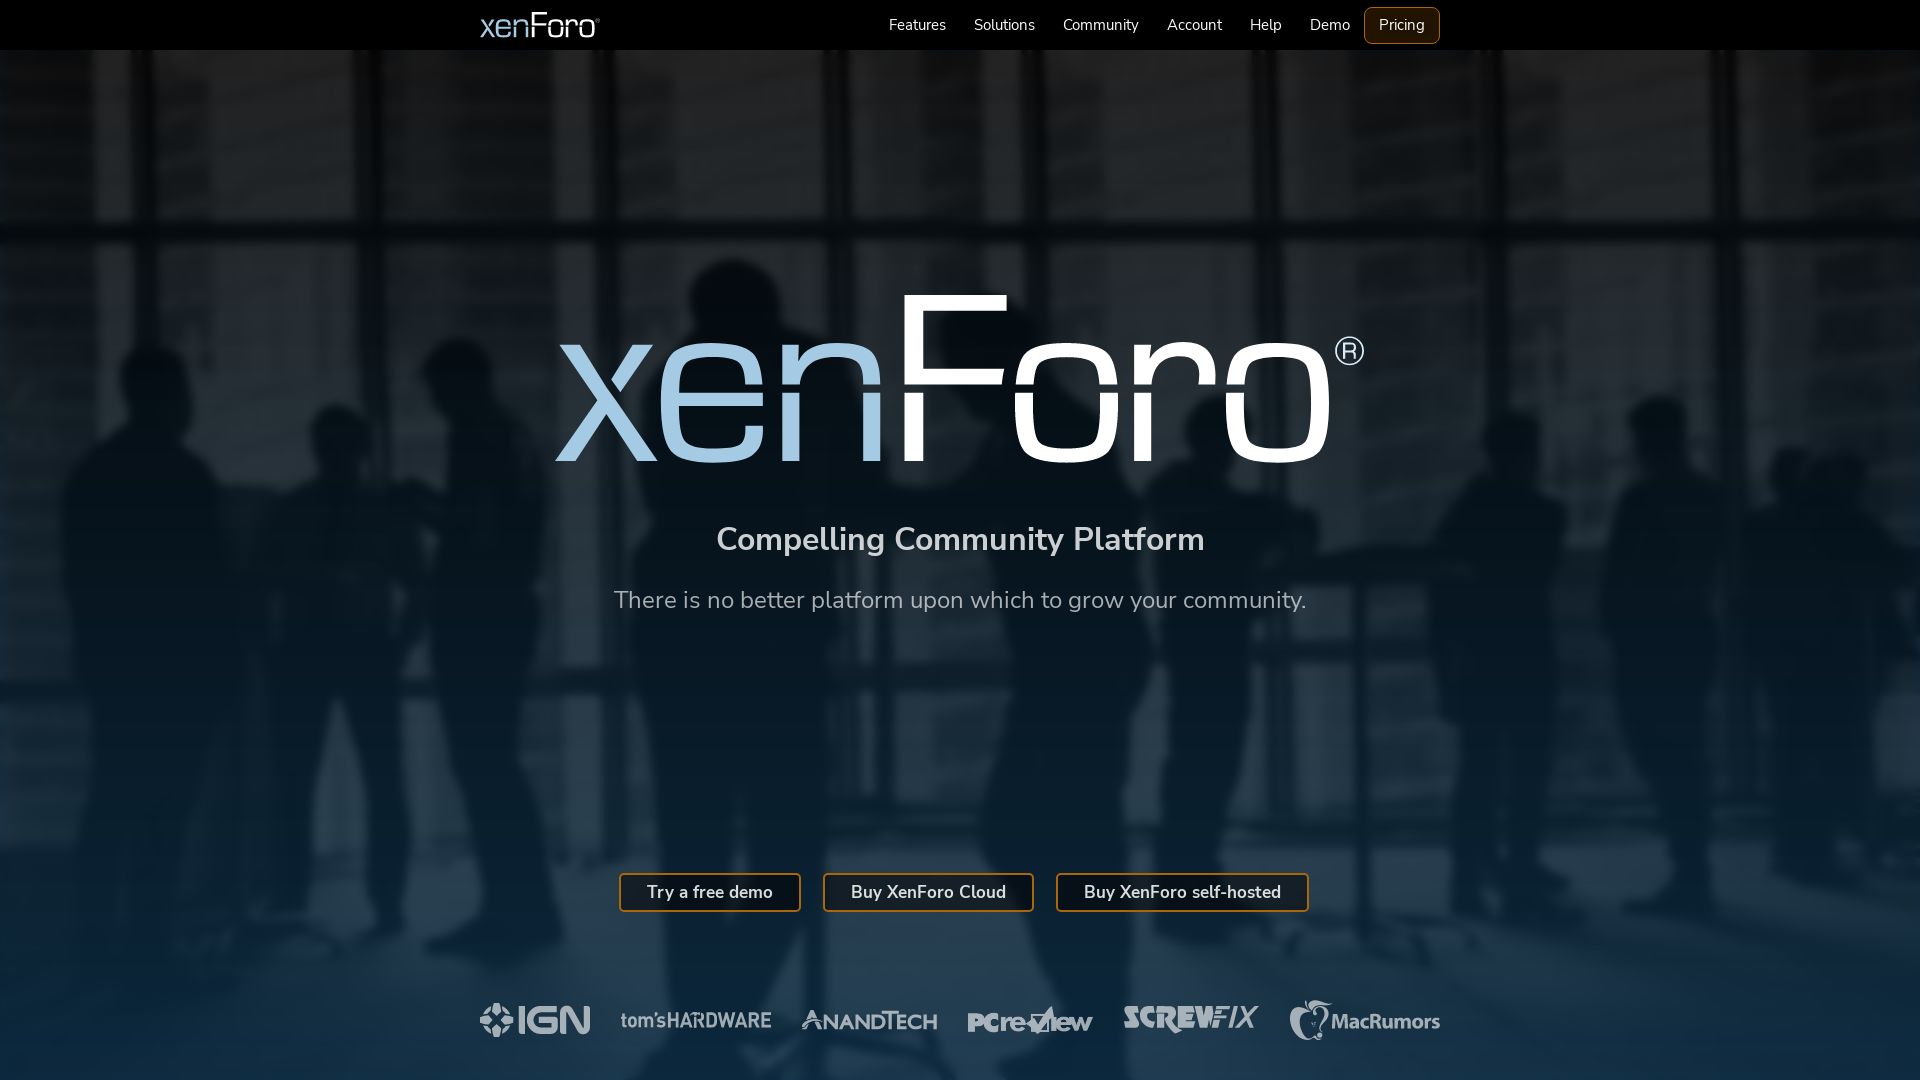 вебсайт xenforo.com Є   ONLINE